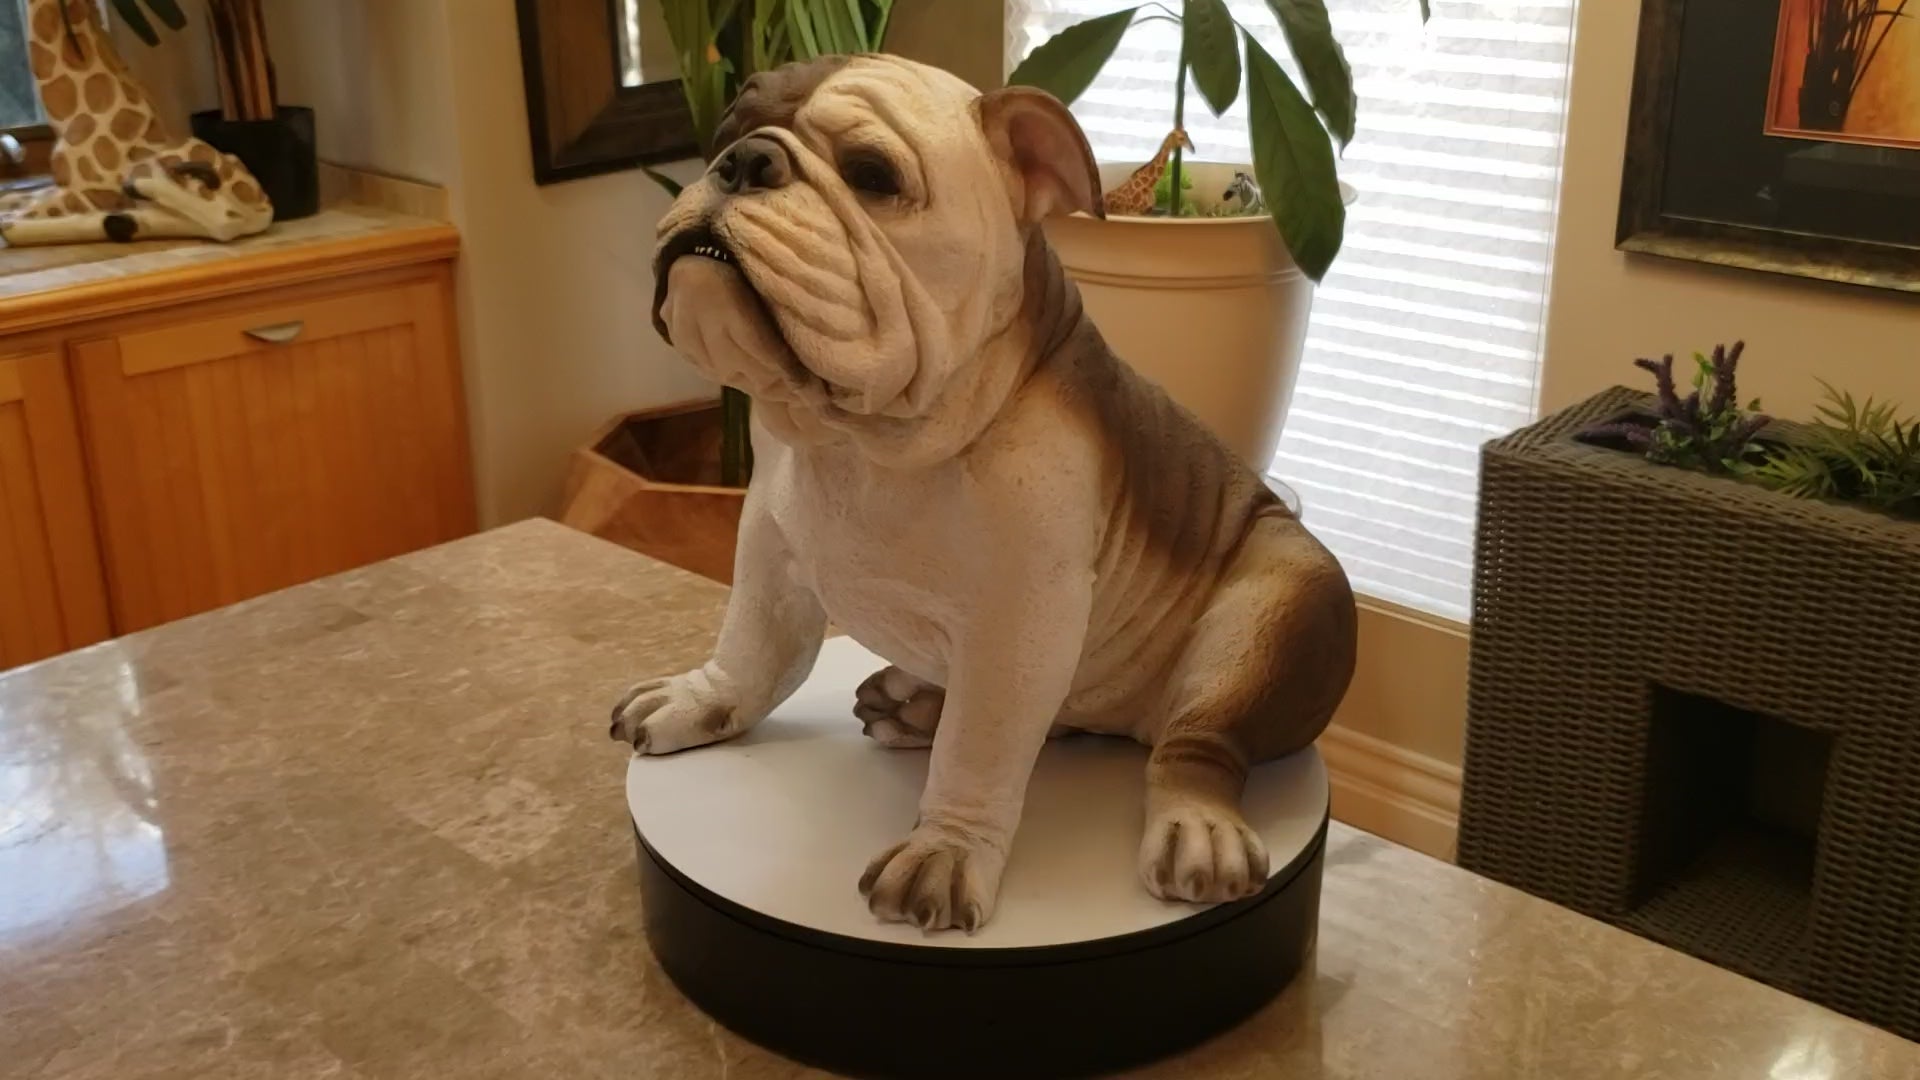 Auction for sale bulldog statue